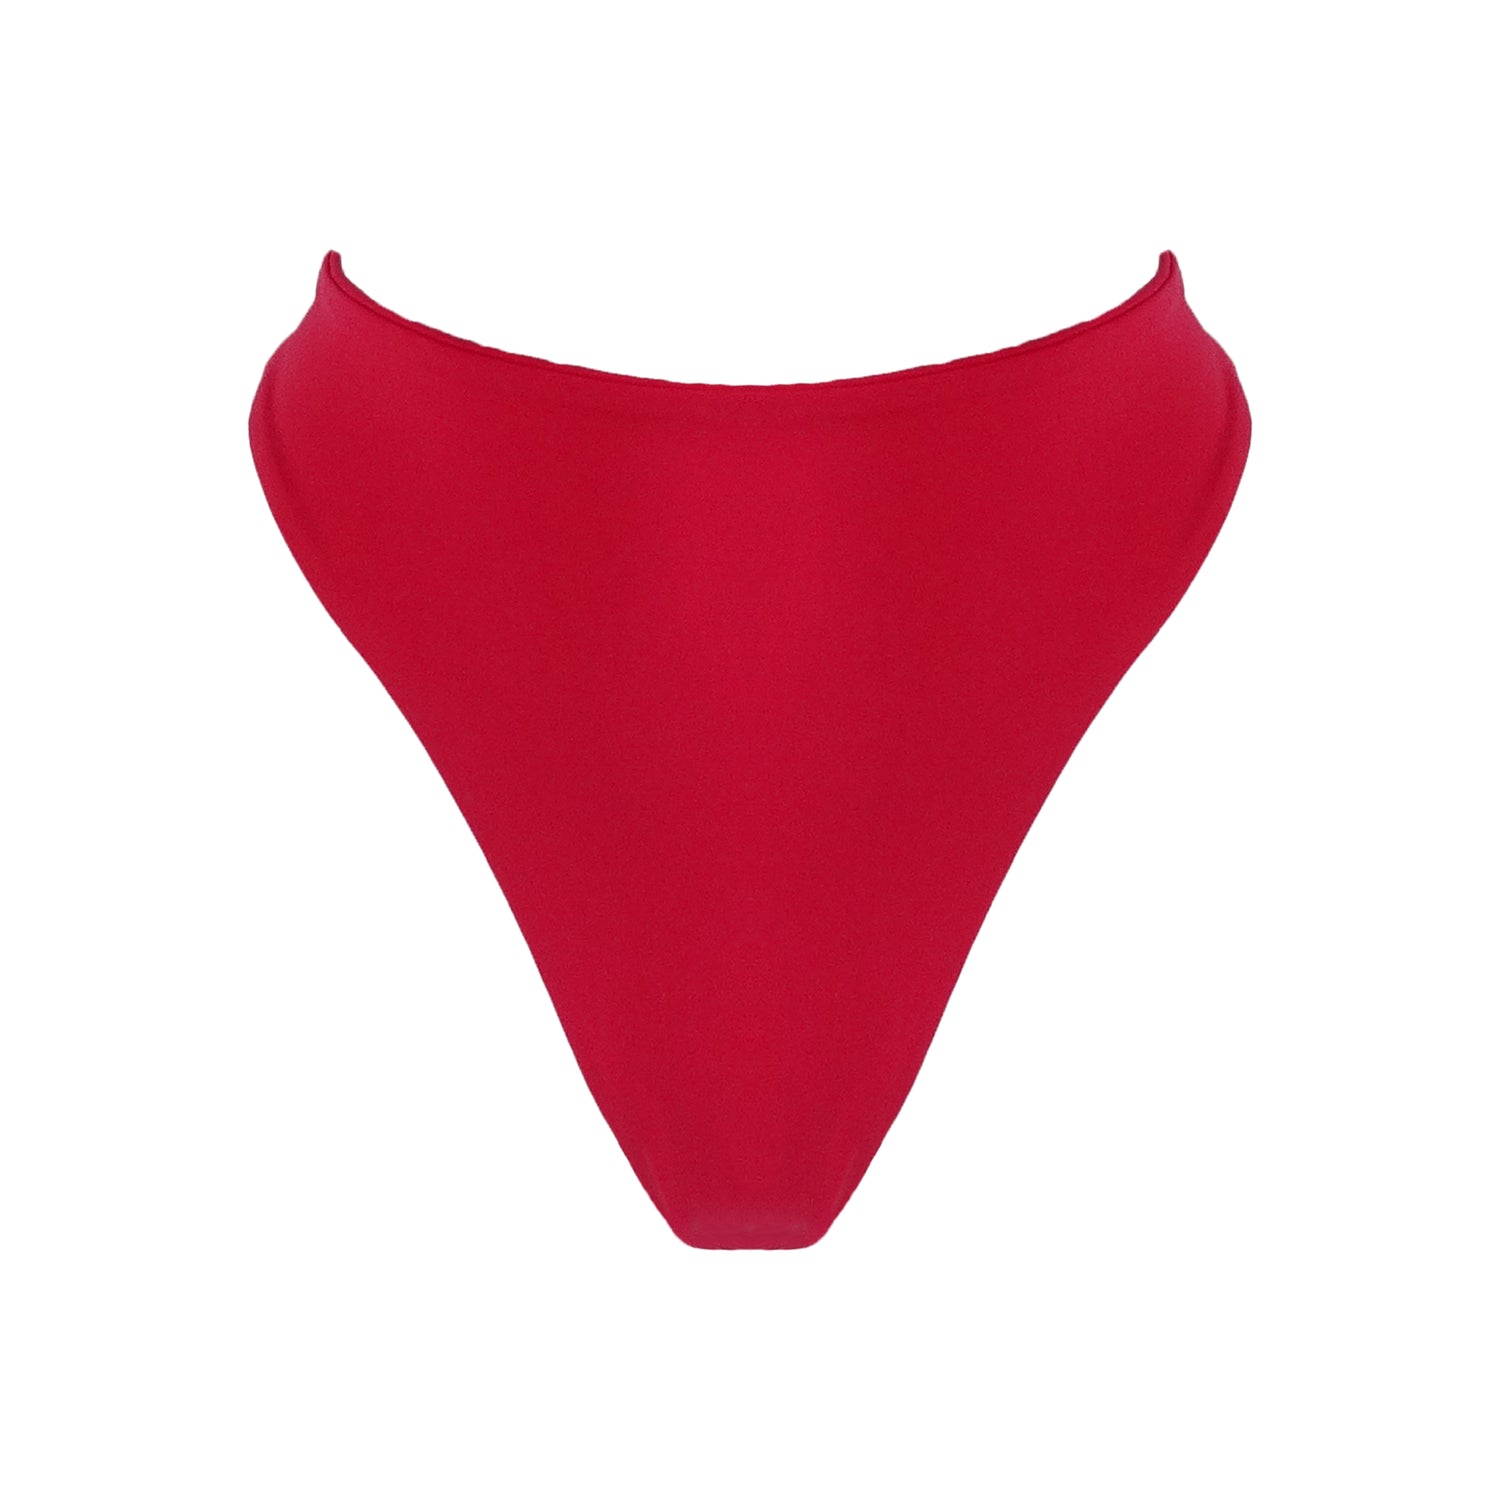 Red High waist thong bikini bottom with high cut legs and thong bum coverage.